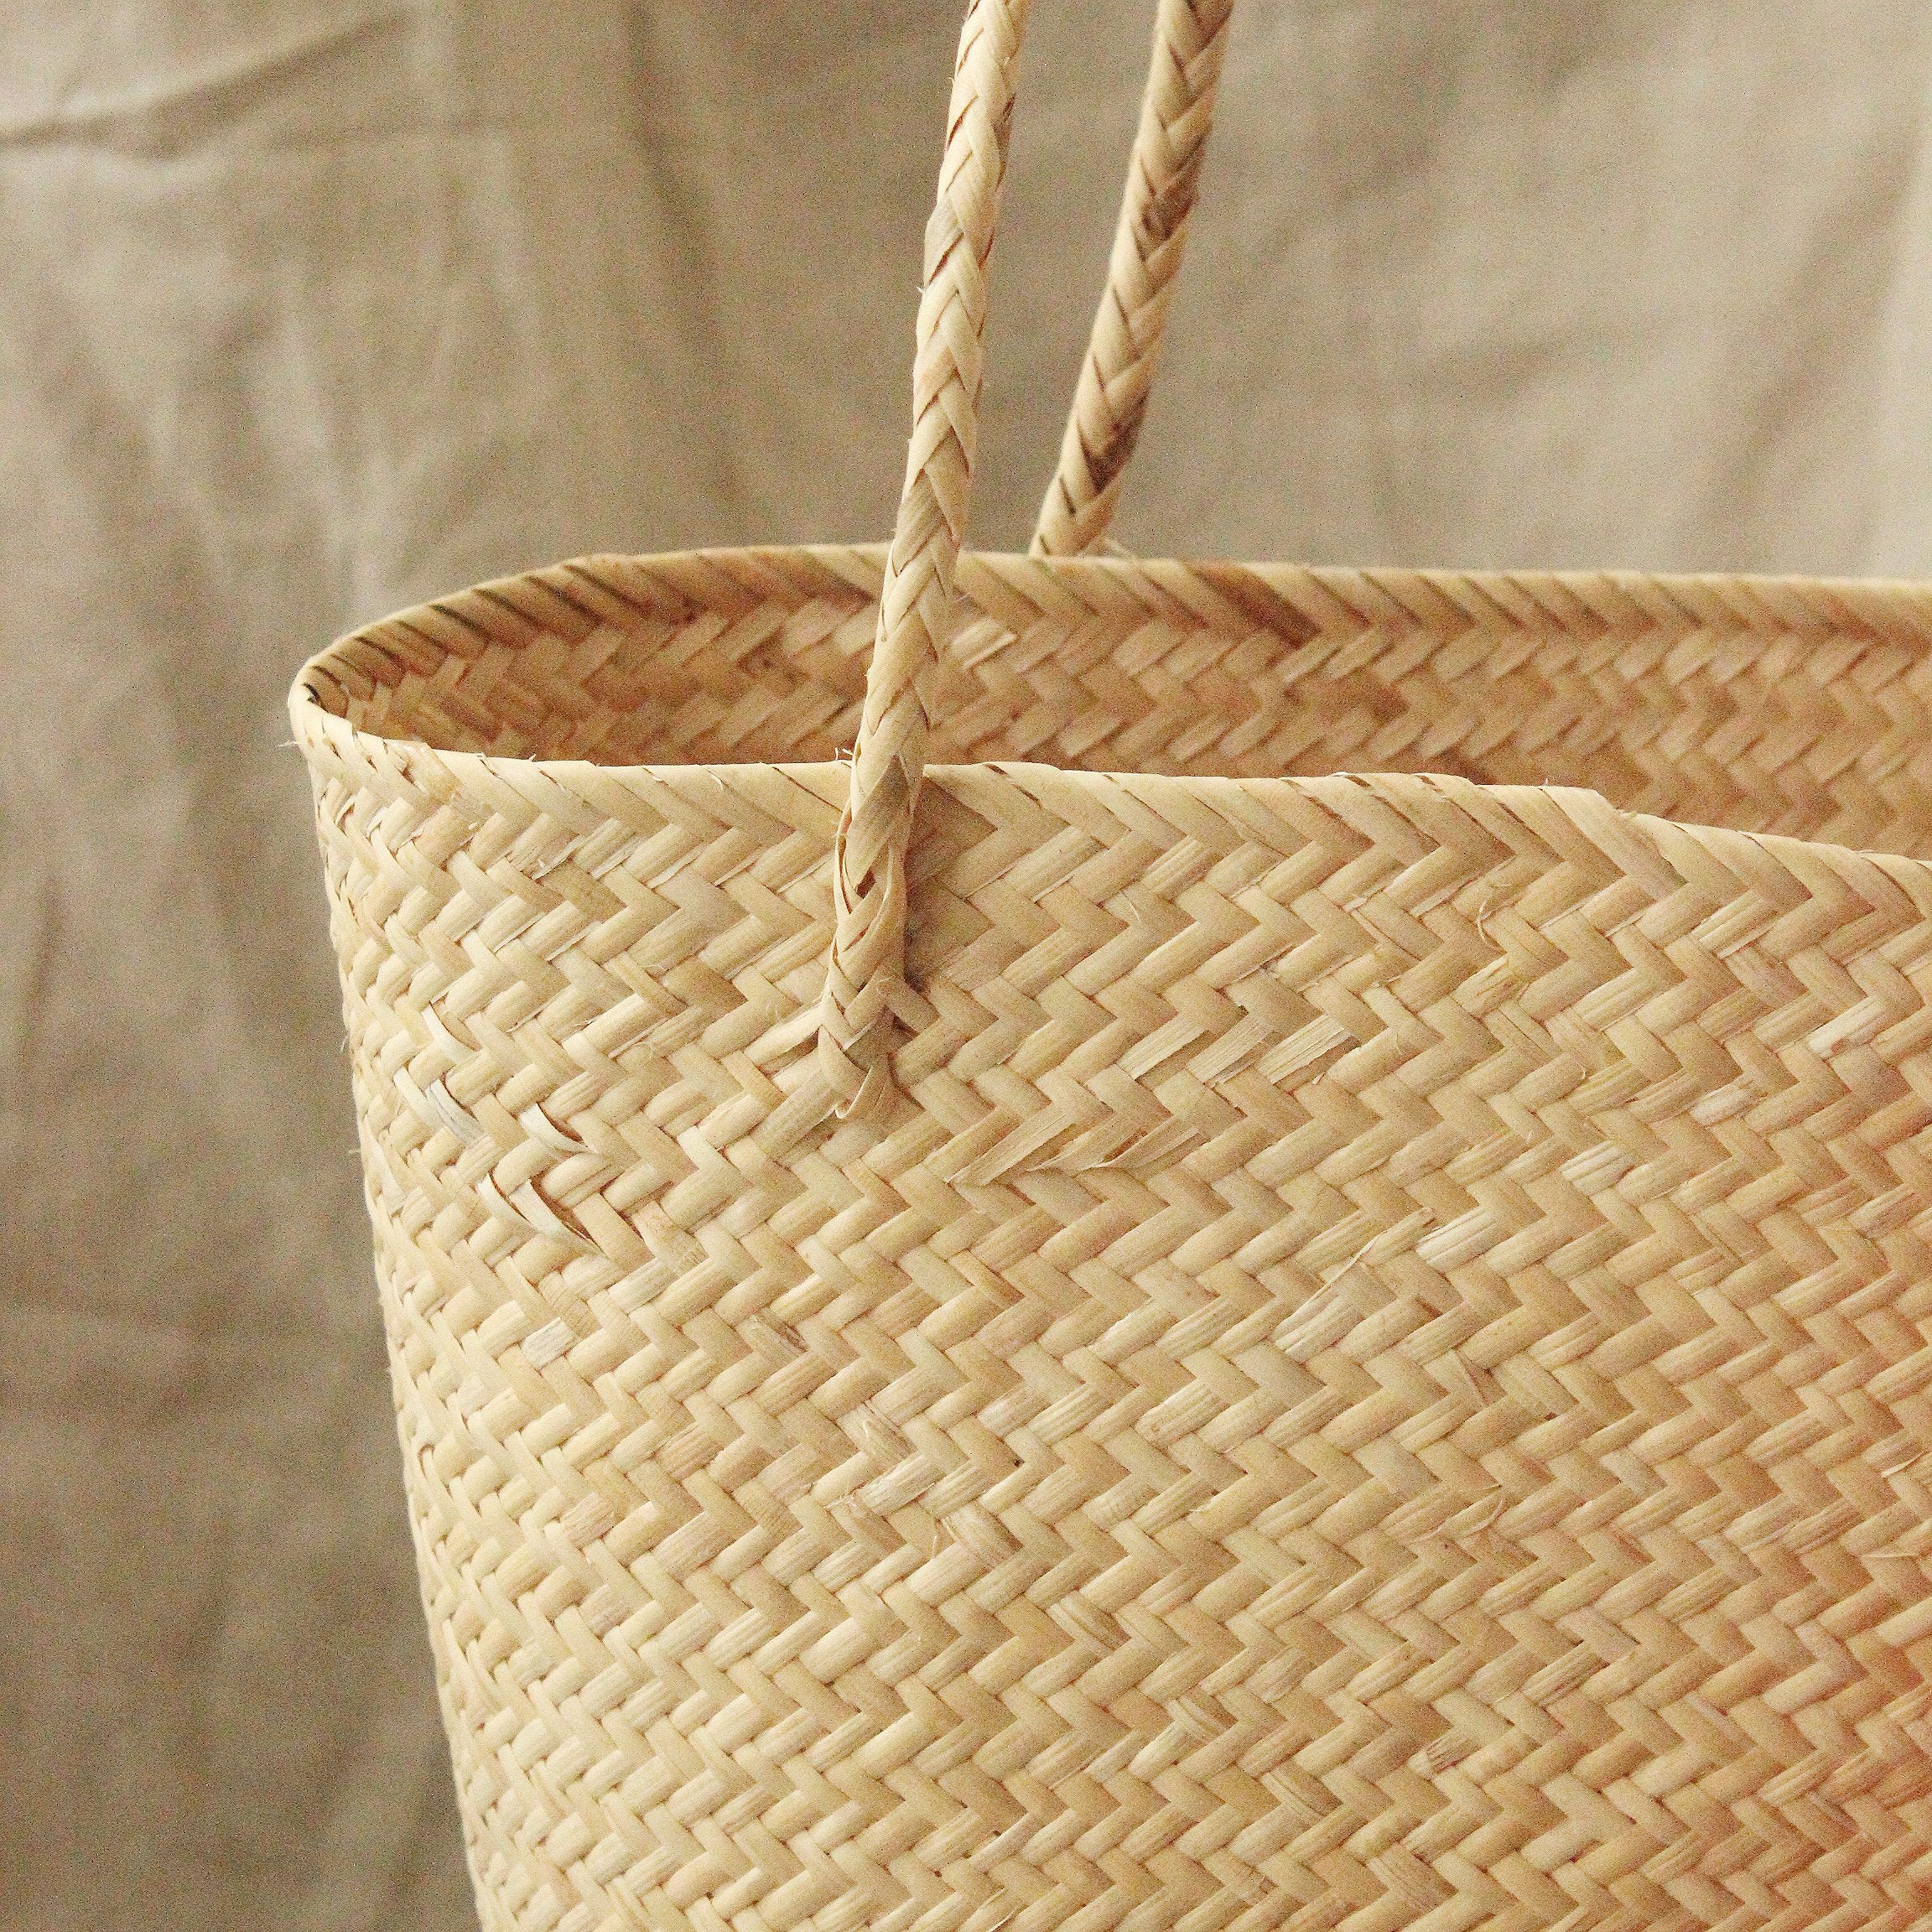 Borneo Love Rush - Handwoven Straw Tote Bag with